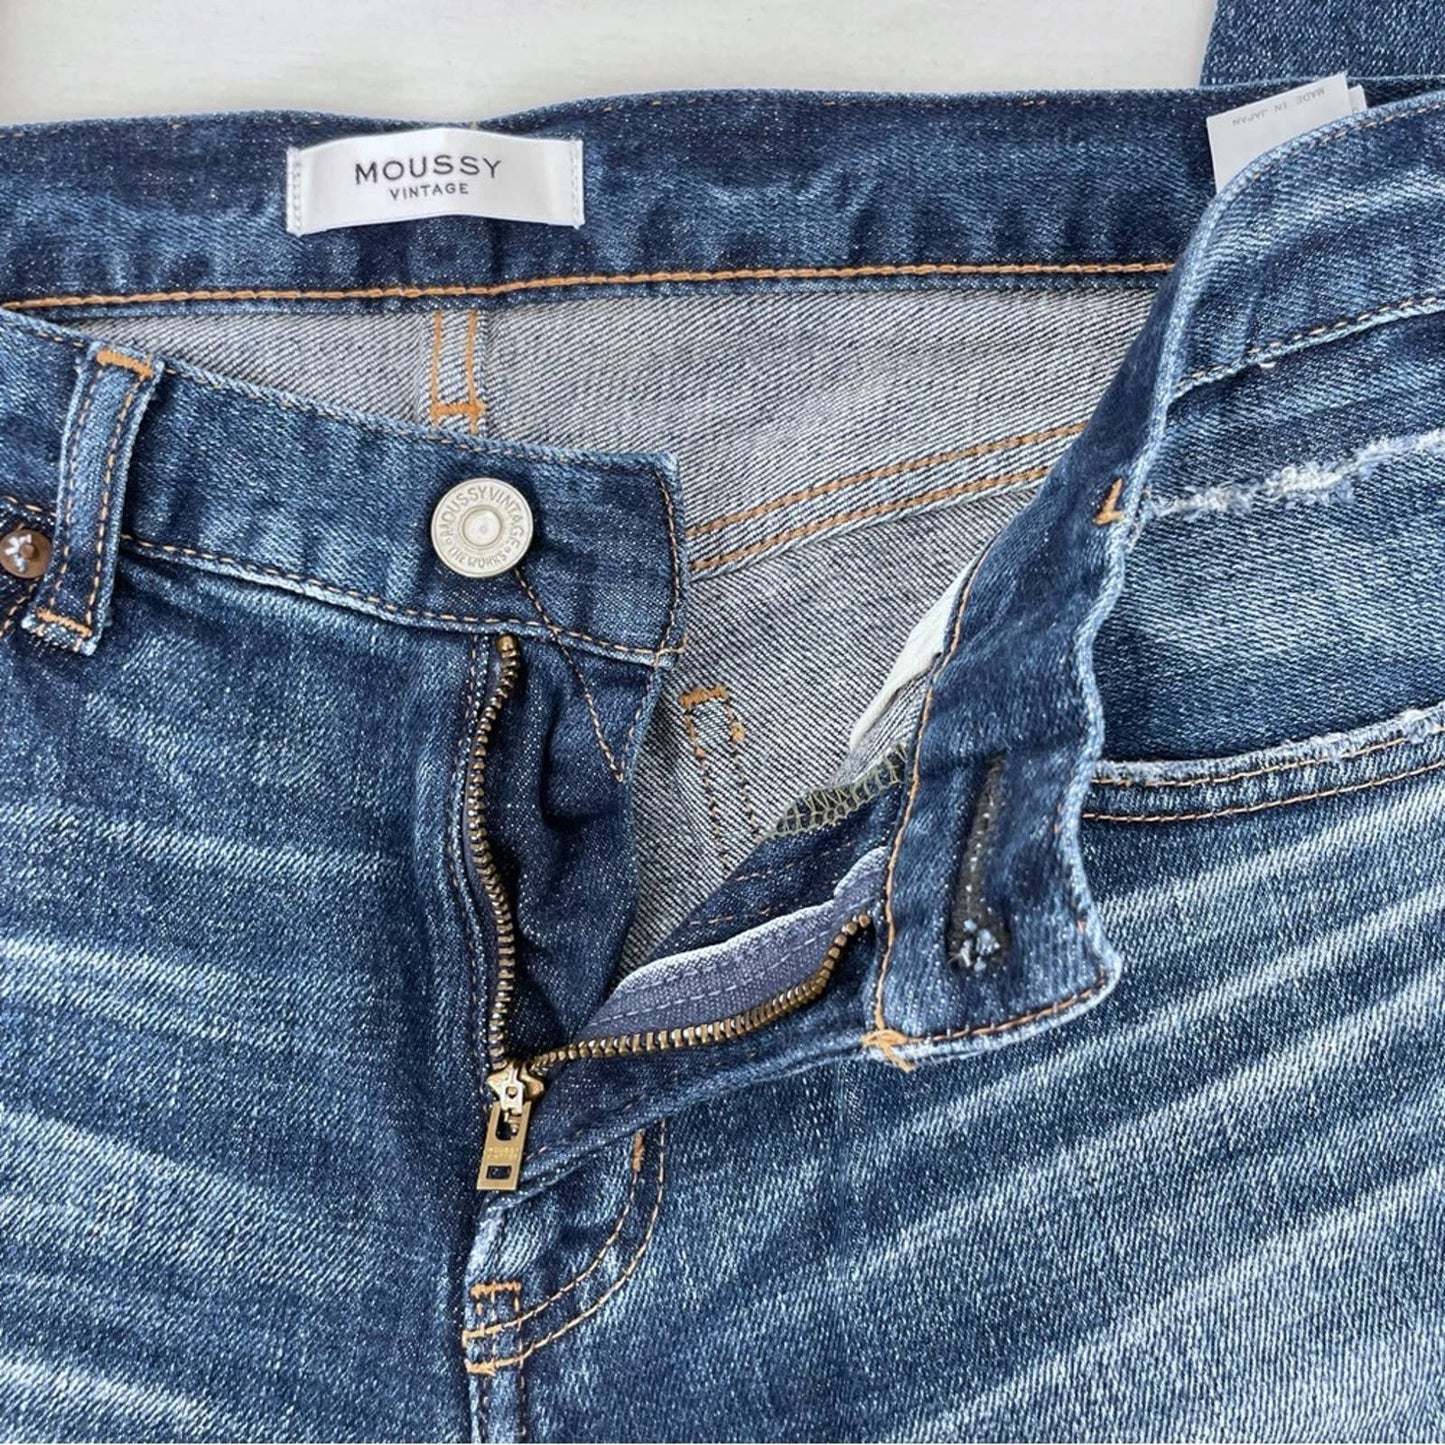 Moussy Glendele Skinny Jeans in Blue 29 Distressed Raw Chewed Hem Style 025DAC12-2111 Size 29